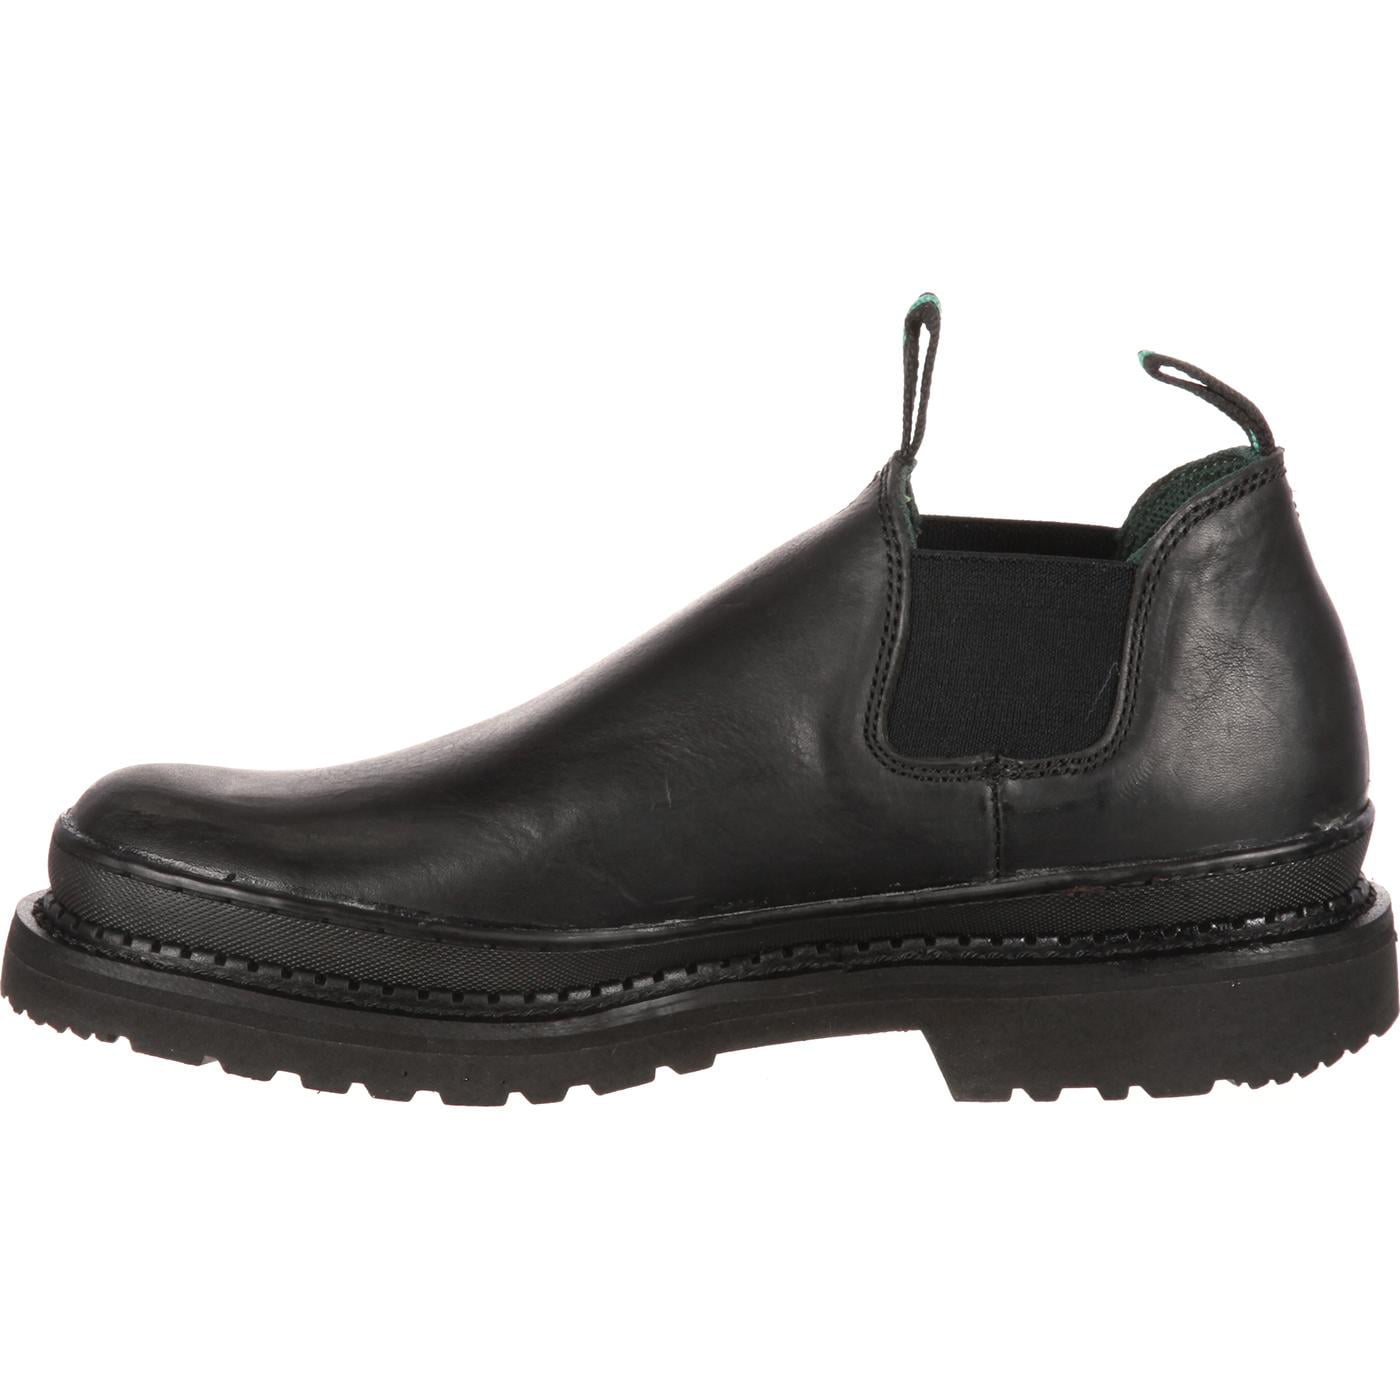 black slip on work shoes